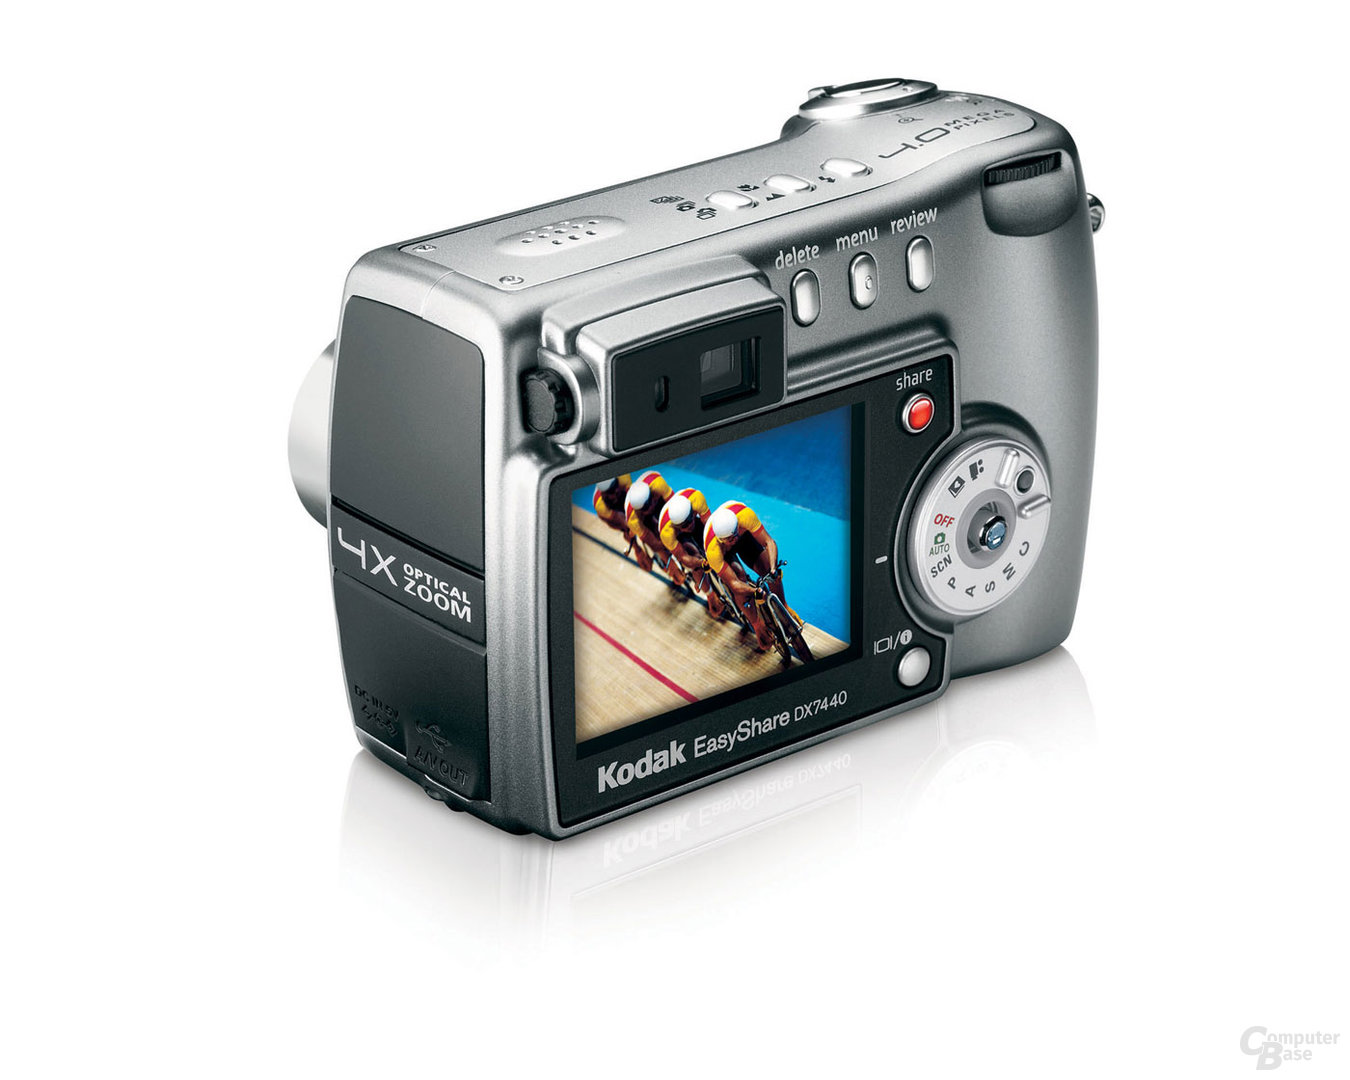 Kodak EasyShare DX7440